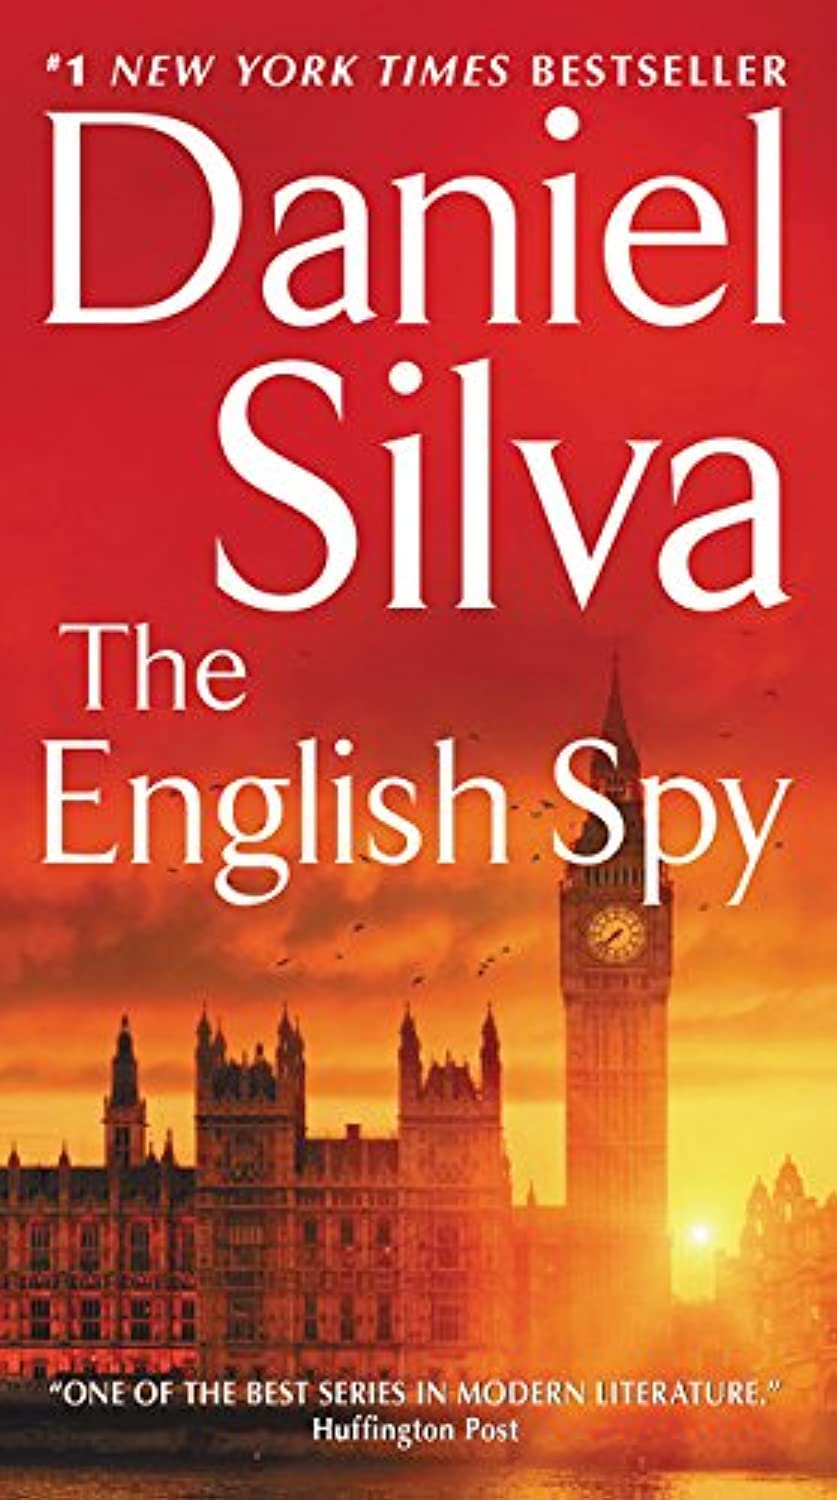 The English Spy (Gabriel Allon 15)